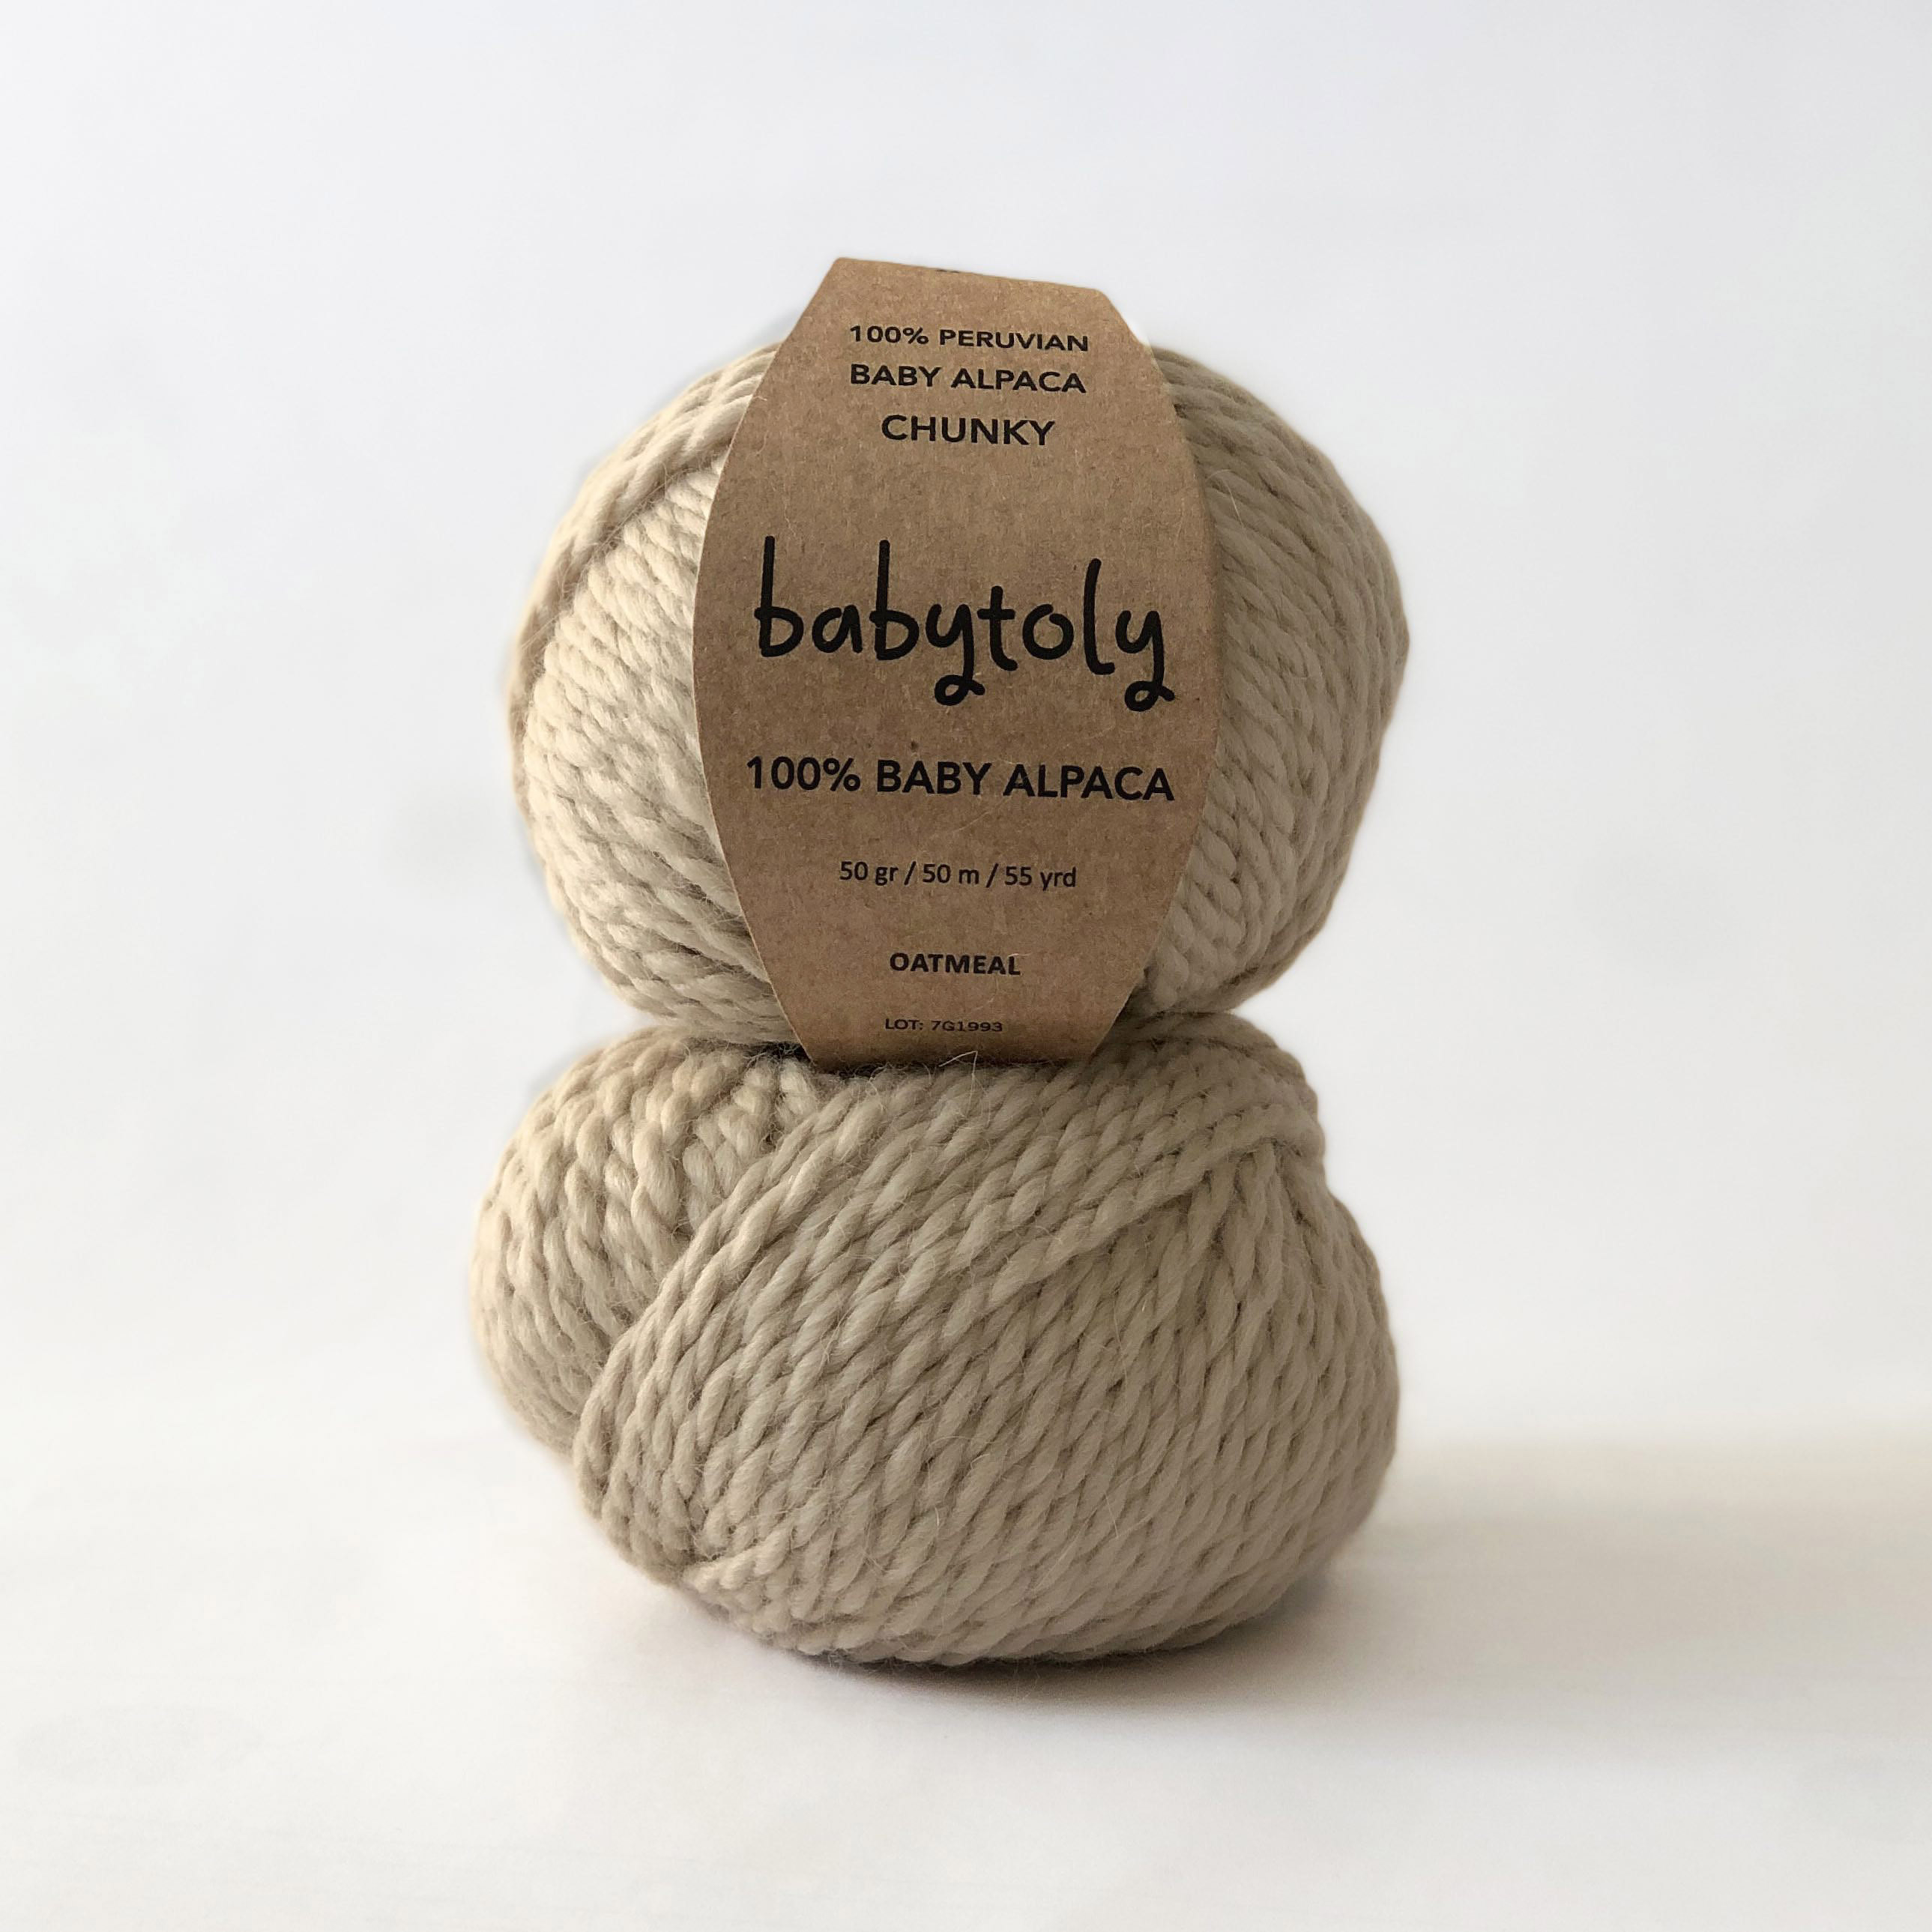 Super Soft Red Baby Alpaca Yarn From Peru for Crocheting or Knitting/  INDIECITA Double Knitting 4/9 Baby Alpaca Yarn 